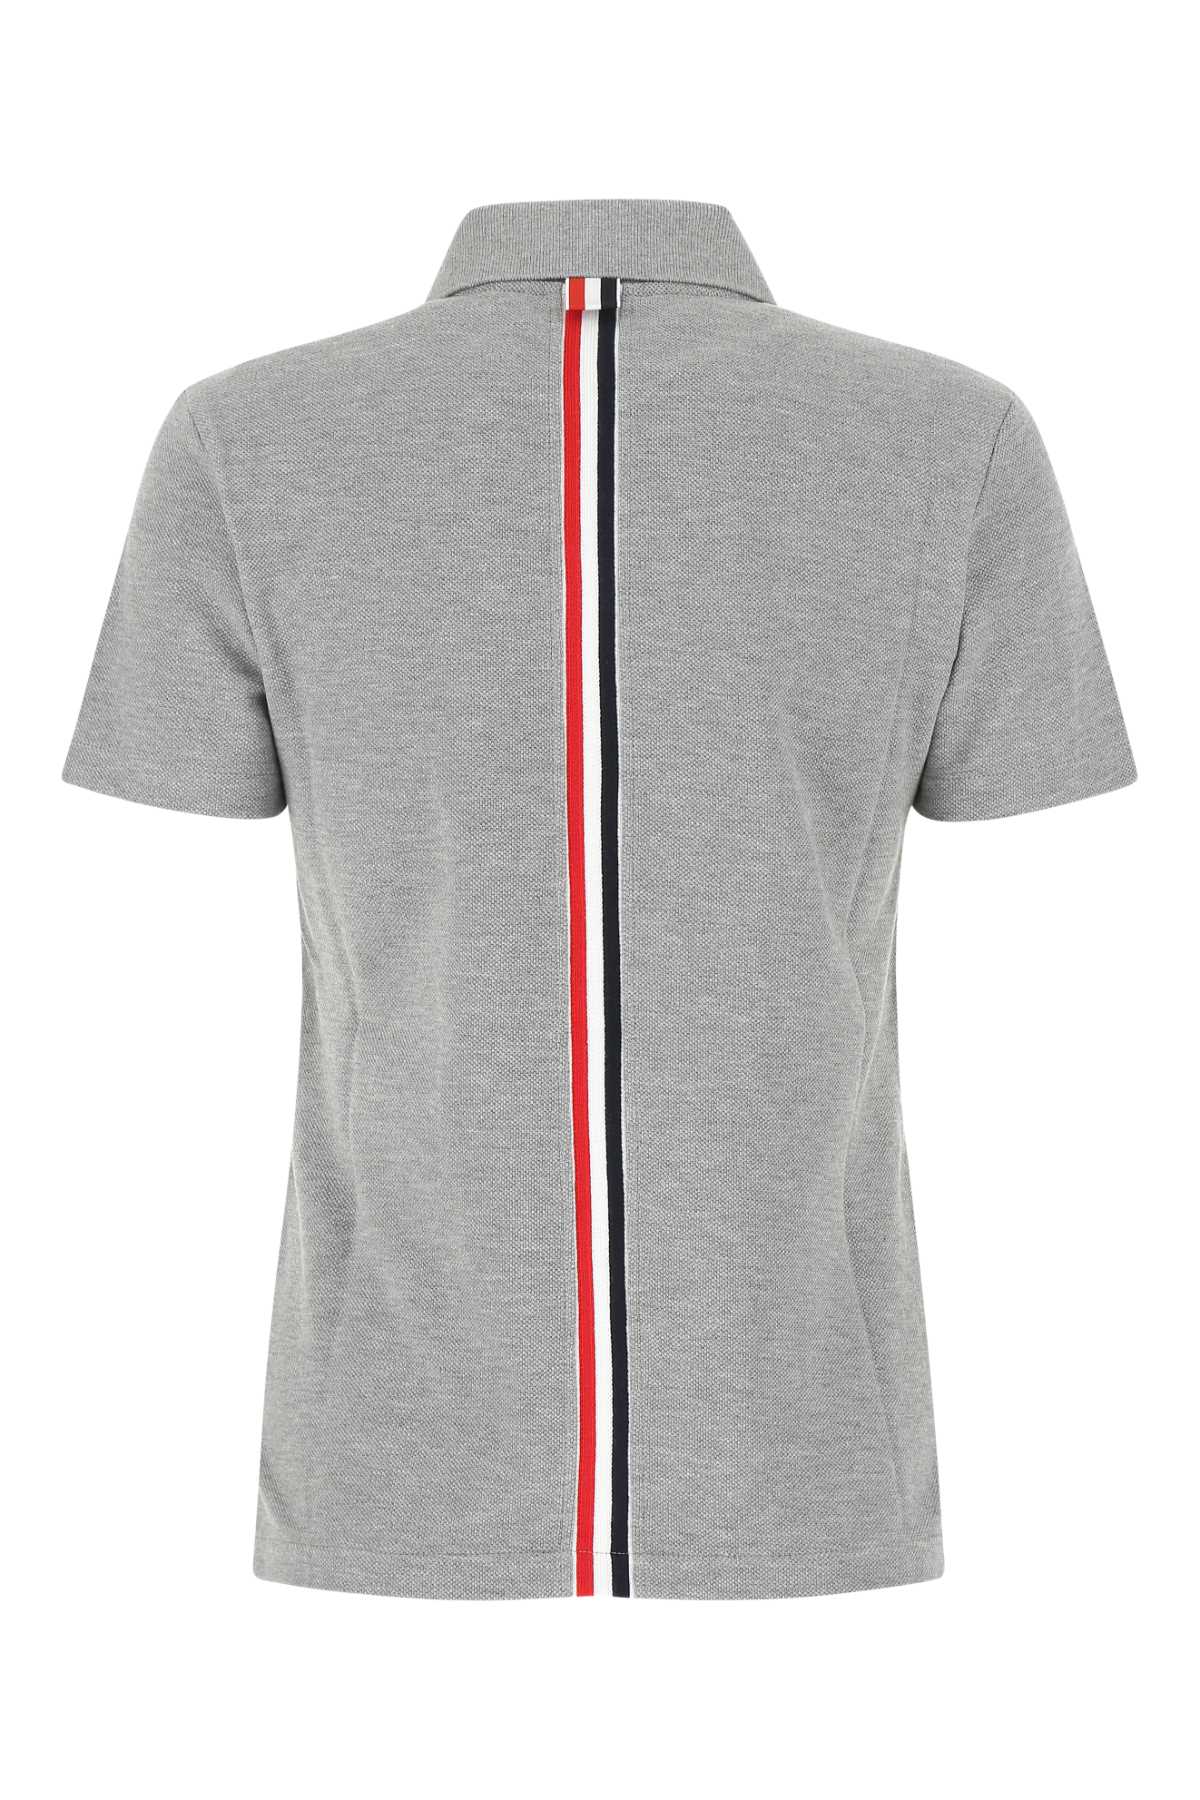 Thom Browne Grey Piquet Polo Shirt In 055